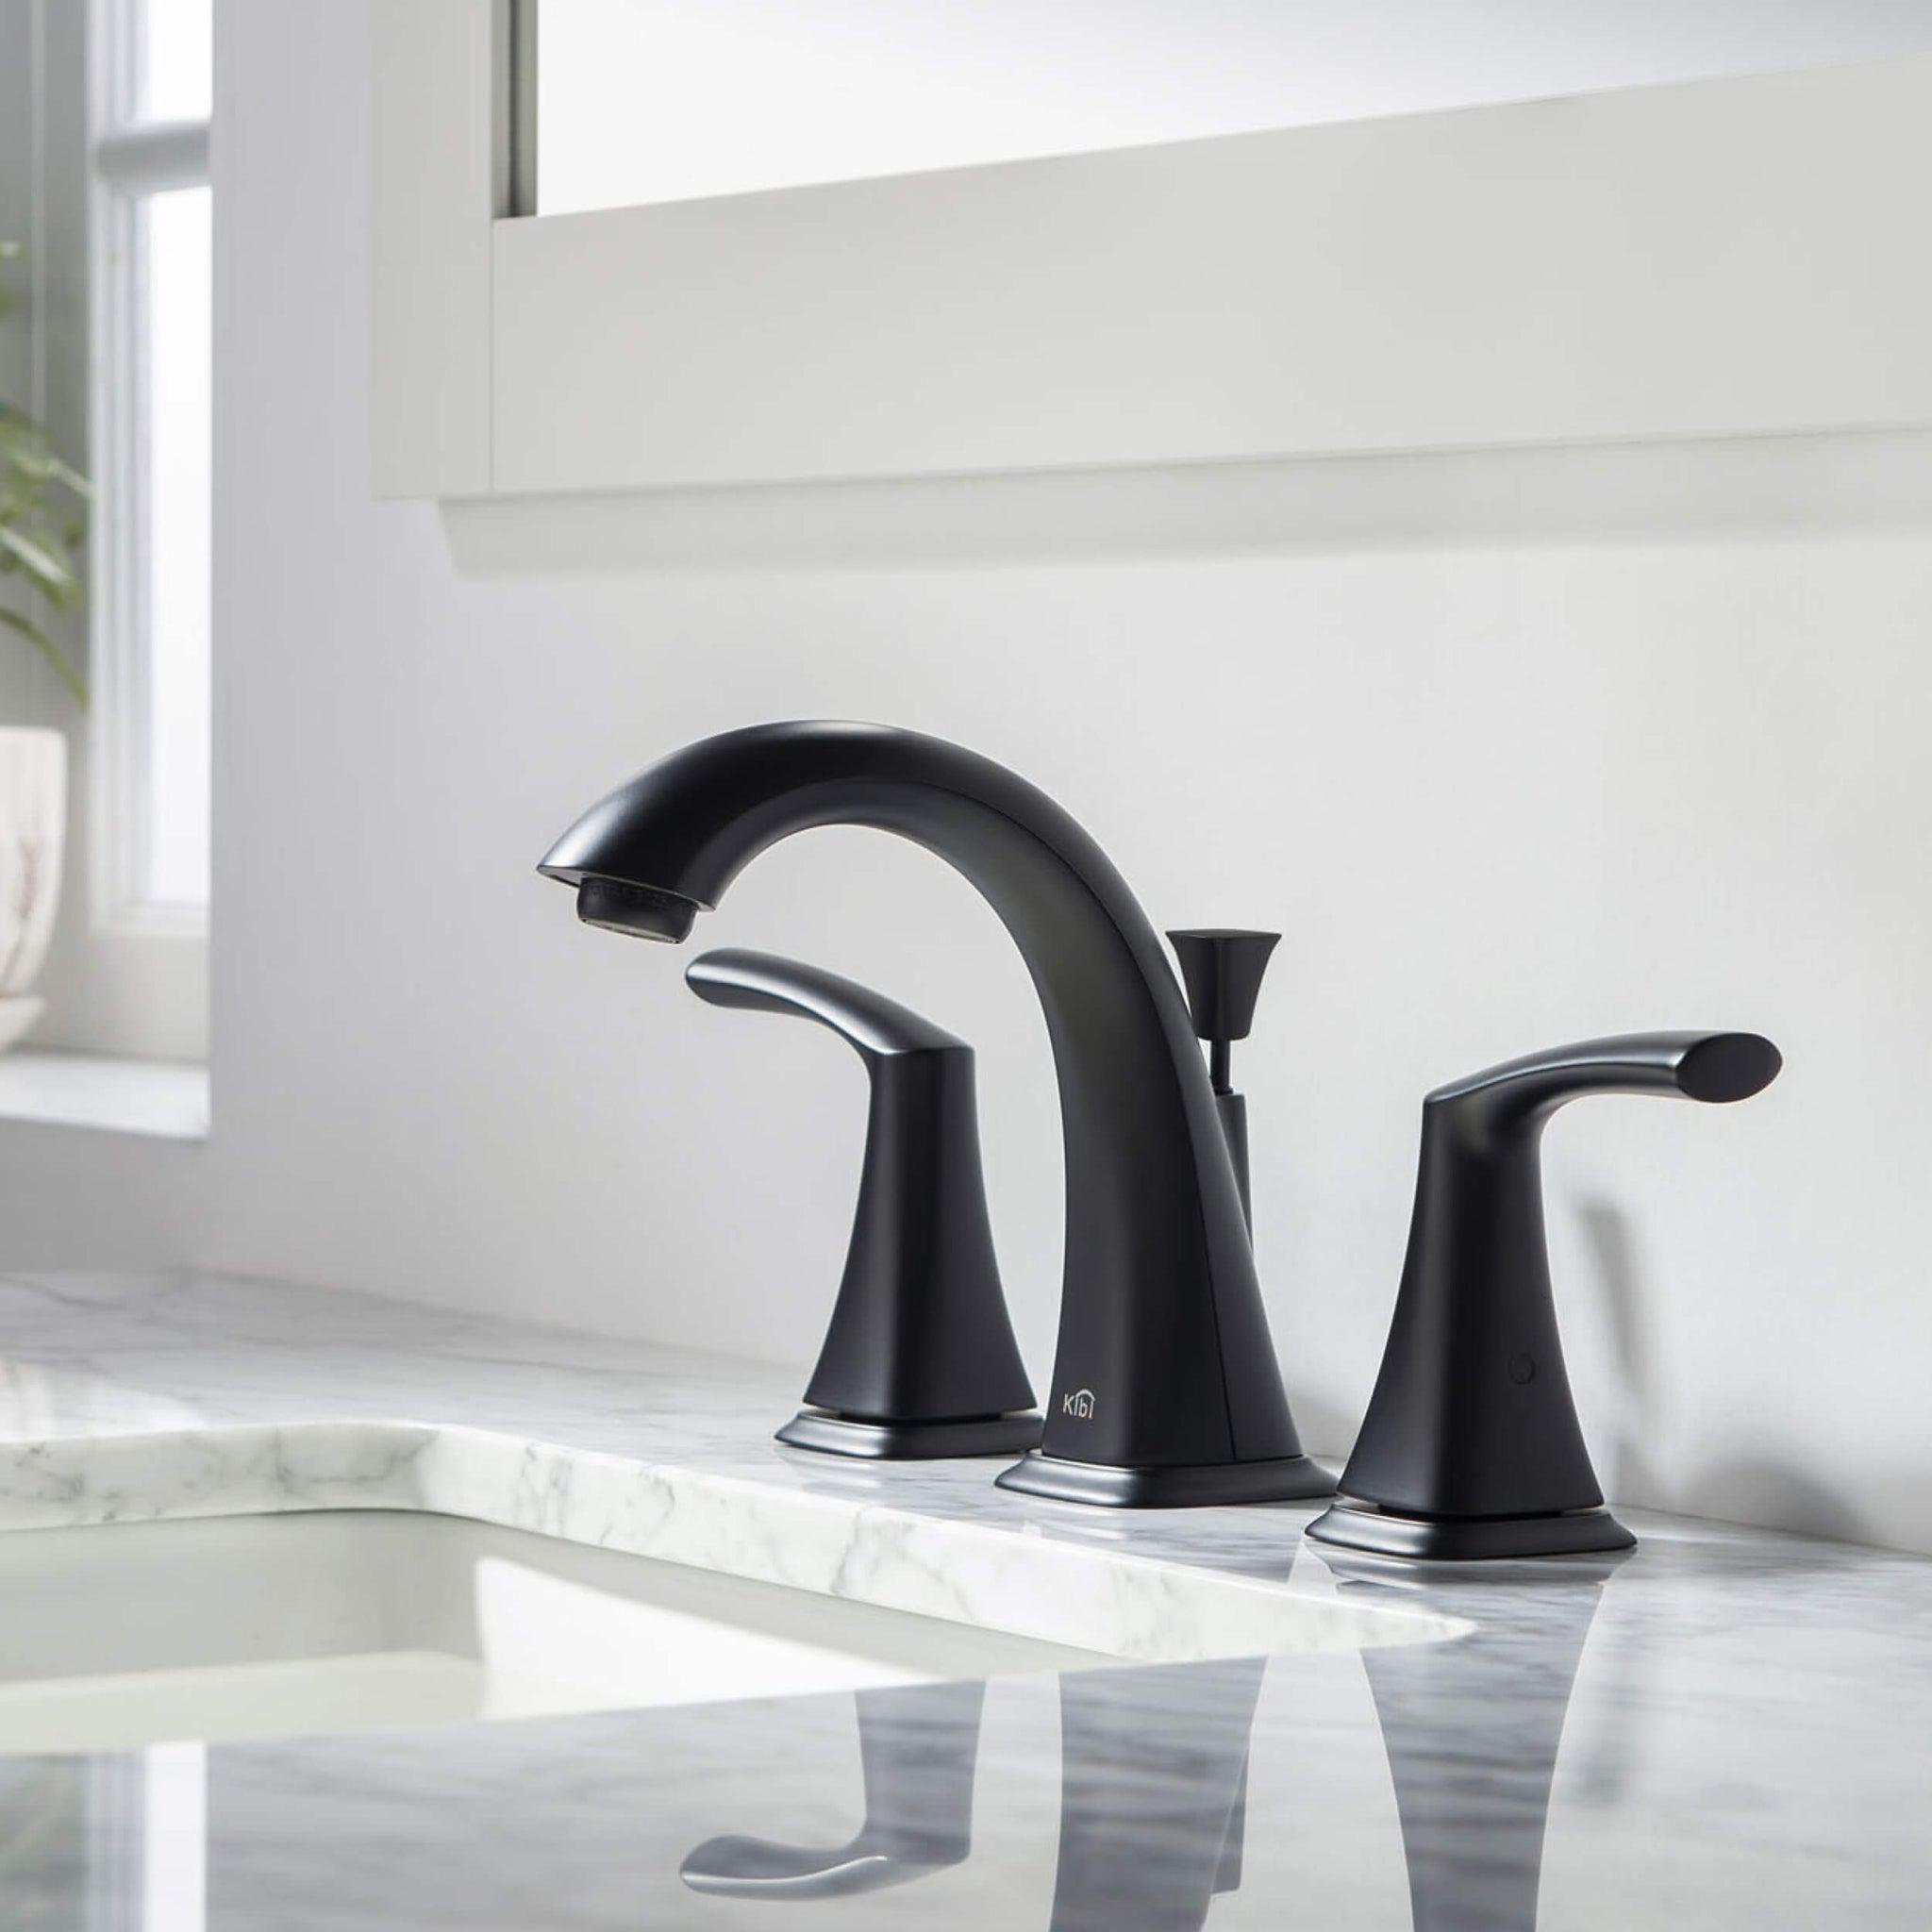 KIBI, KIBI Stonehenge 8" Widespread Bathroom Sink Faucet with Pop-up In Matte Black Finish